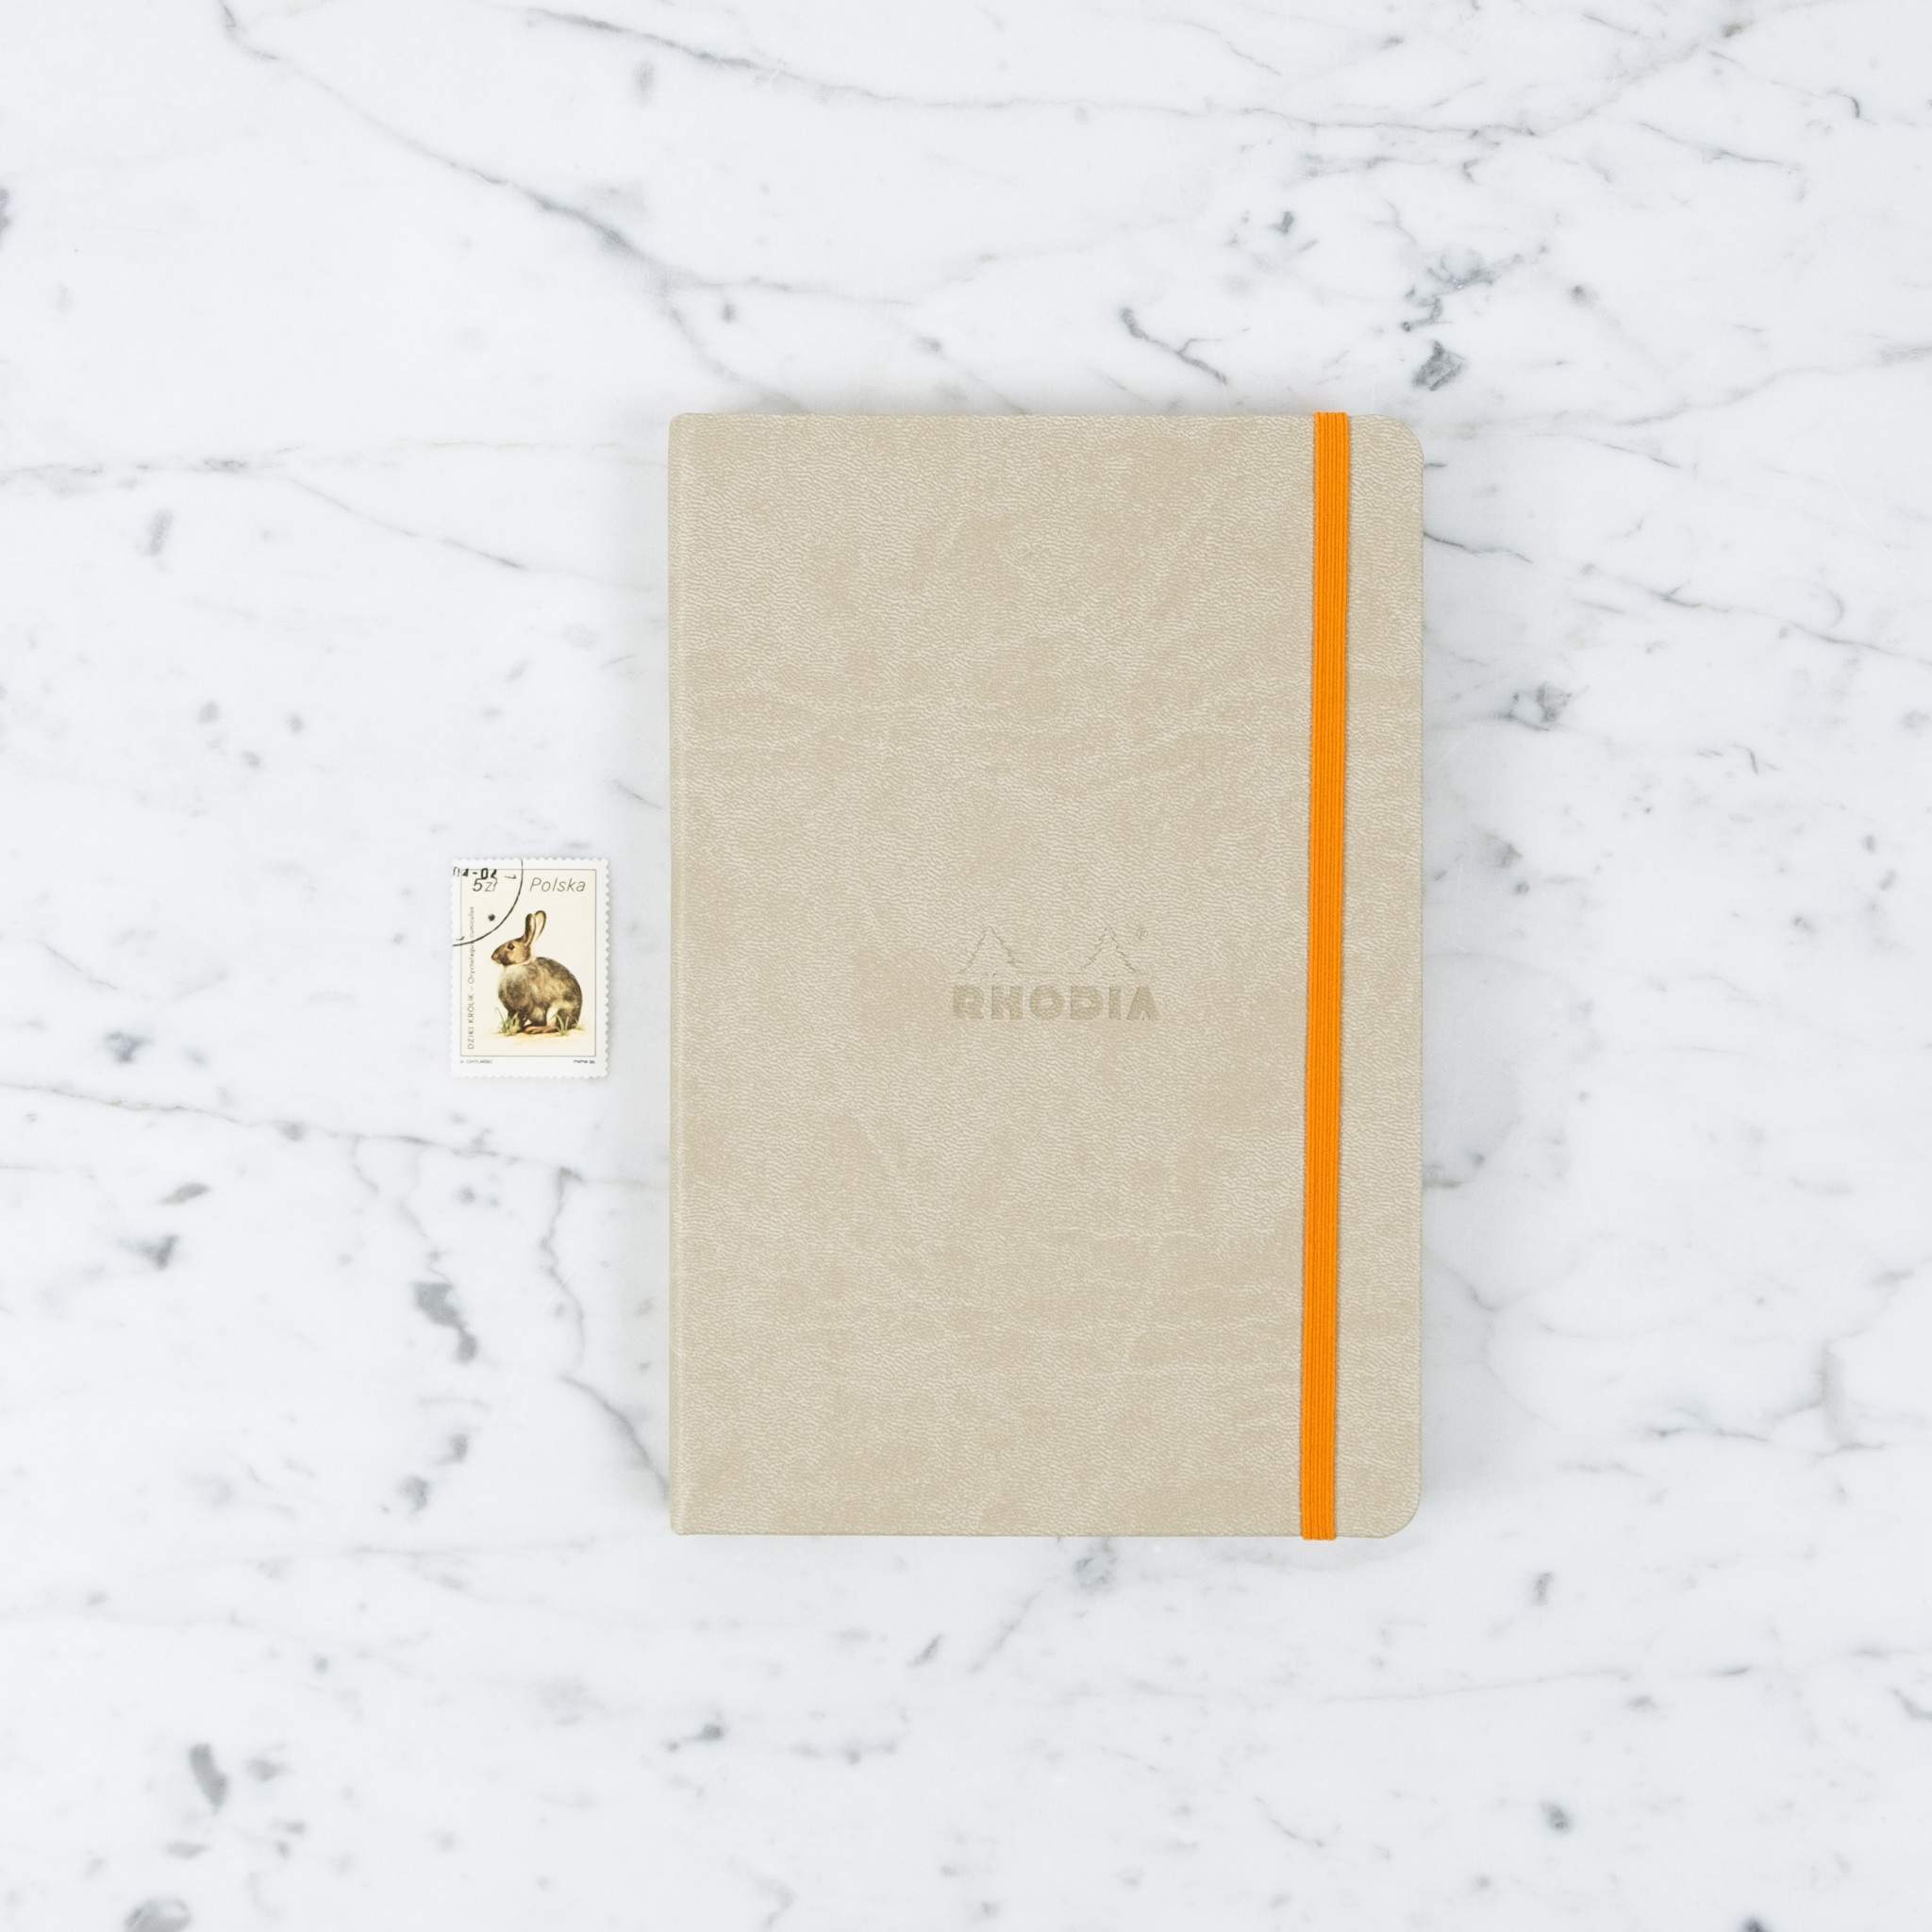 Rhodiarama Rhodiarama Hardcover Notebook - Beige Grey - Lined - A5 - 5.5 x 8.25"